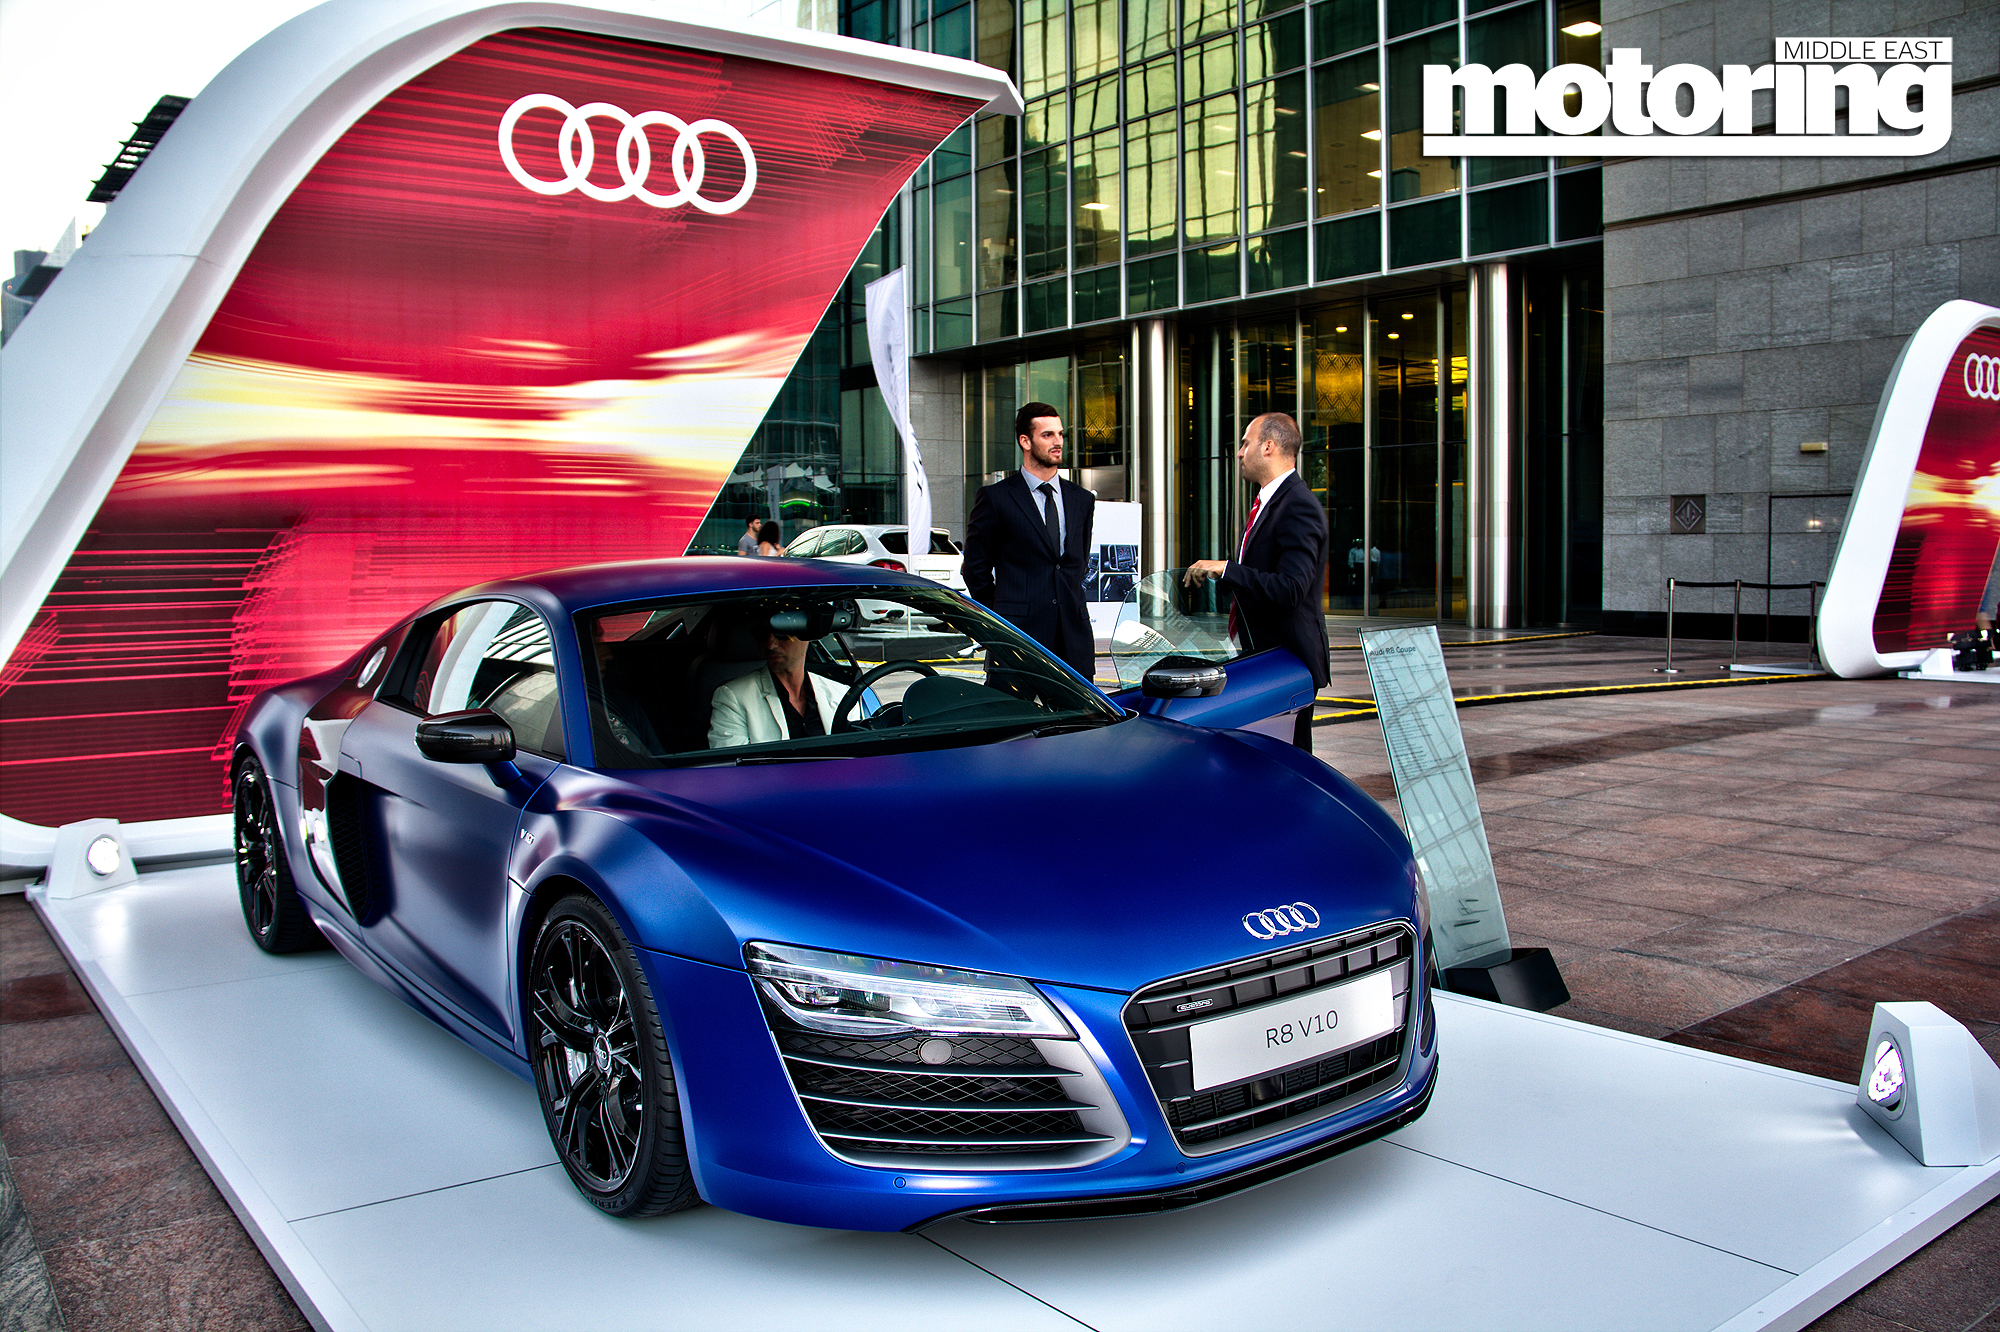 Dubai car show in financial cityMotoring Middle East Car news, Reviews